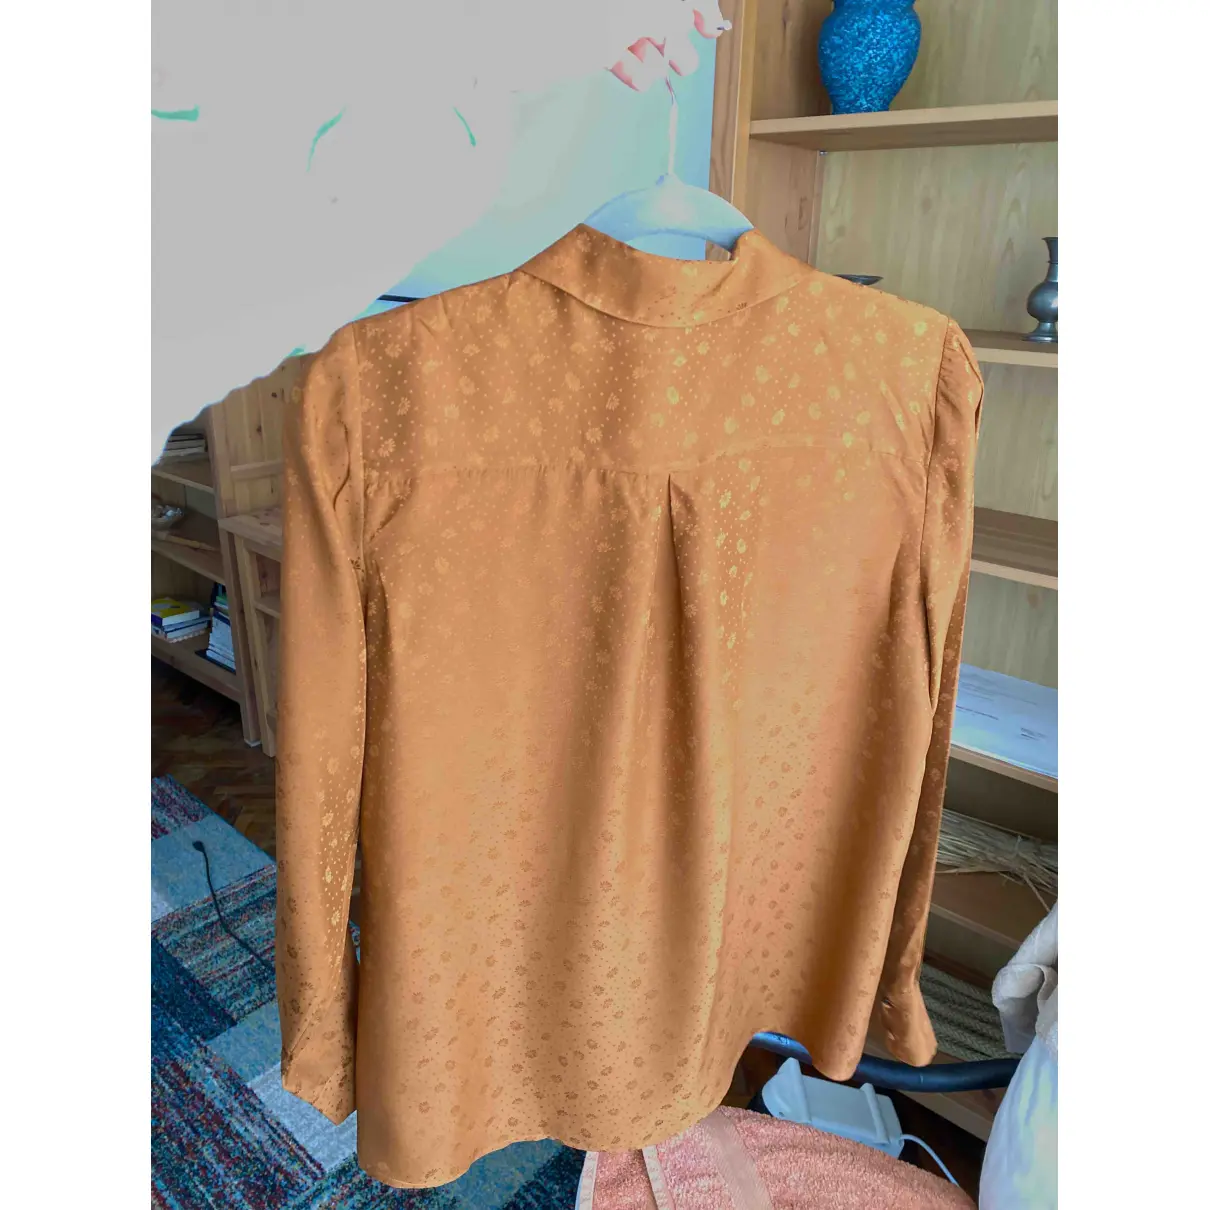 Buy Sézane Spring Summer 2019 silk skirt online